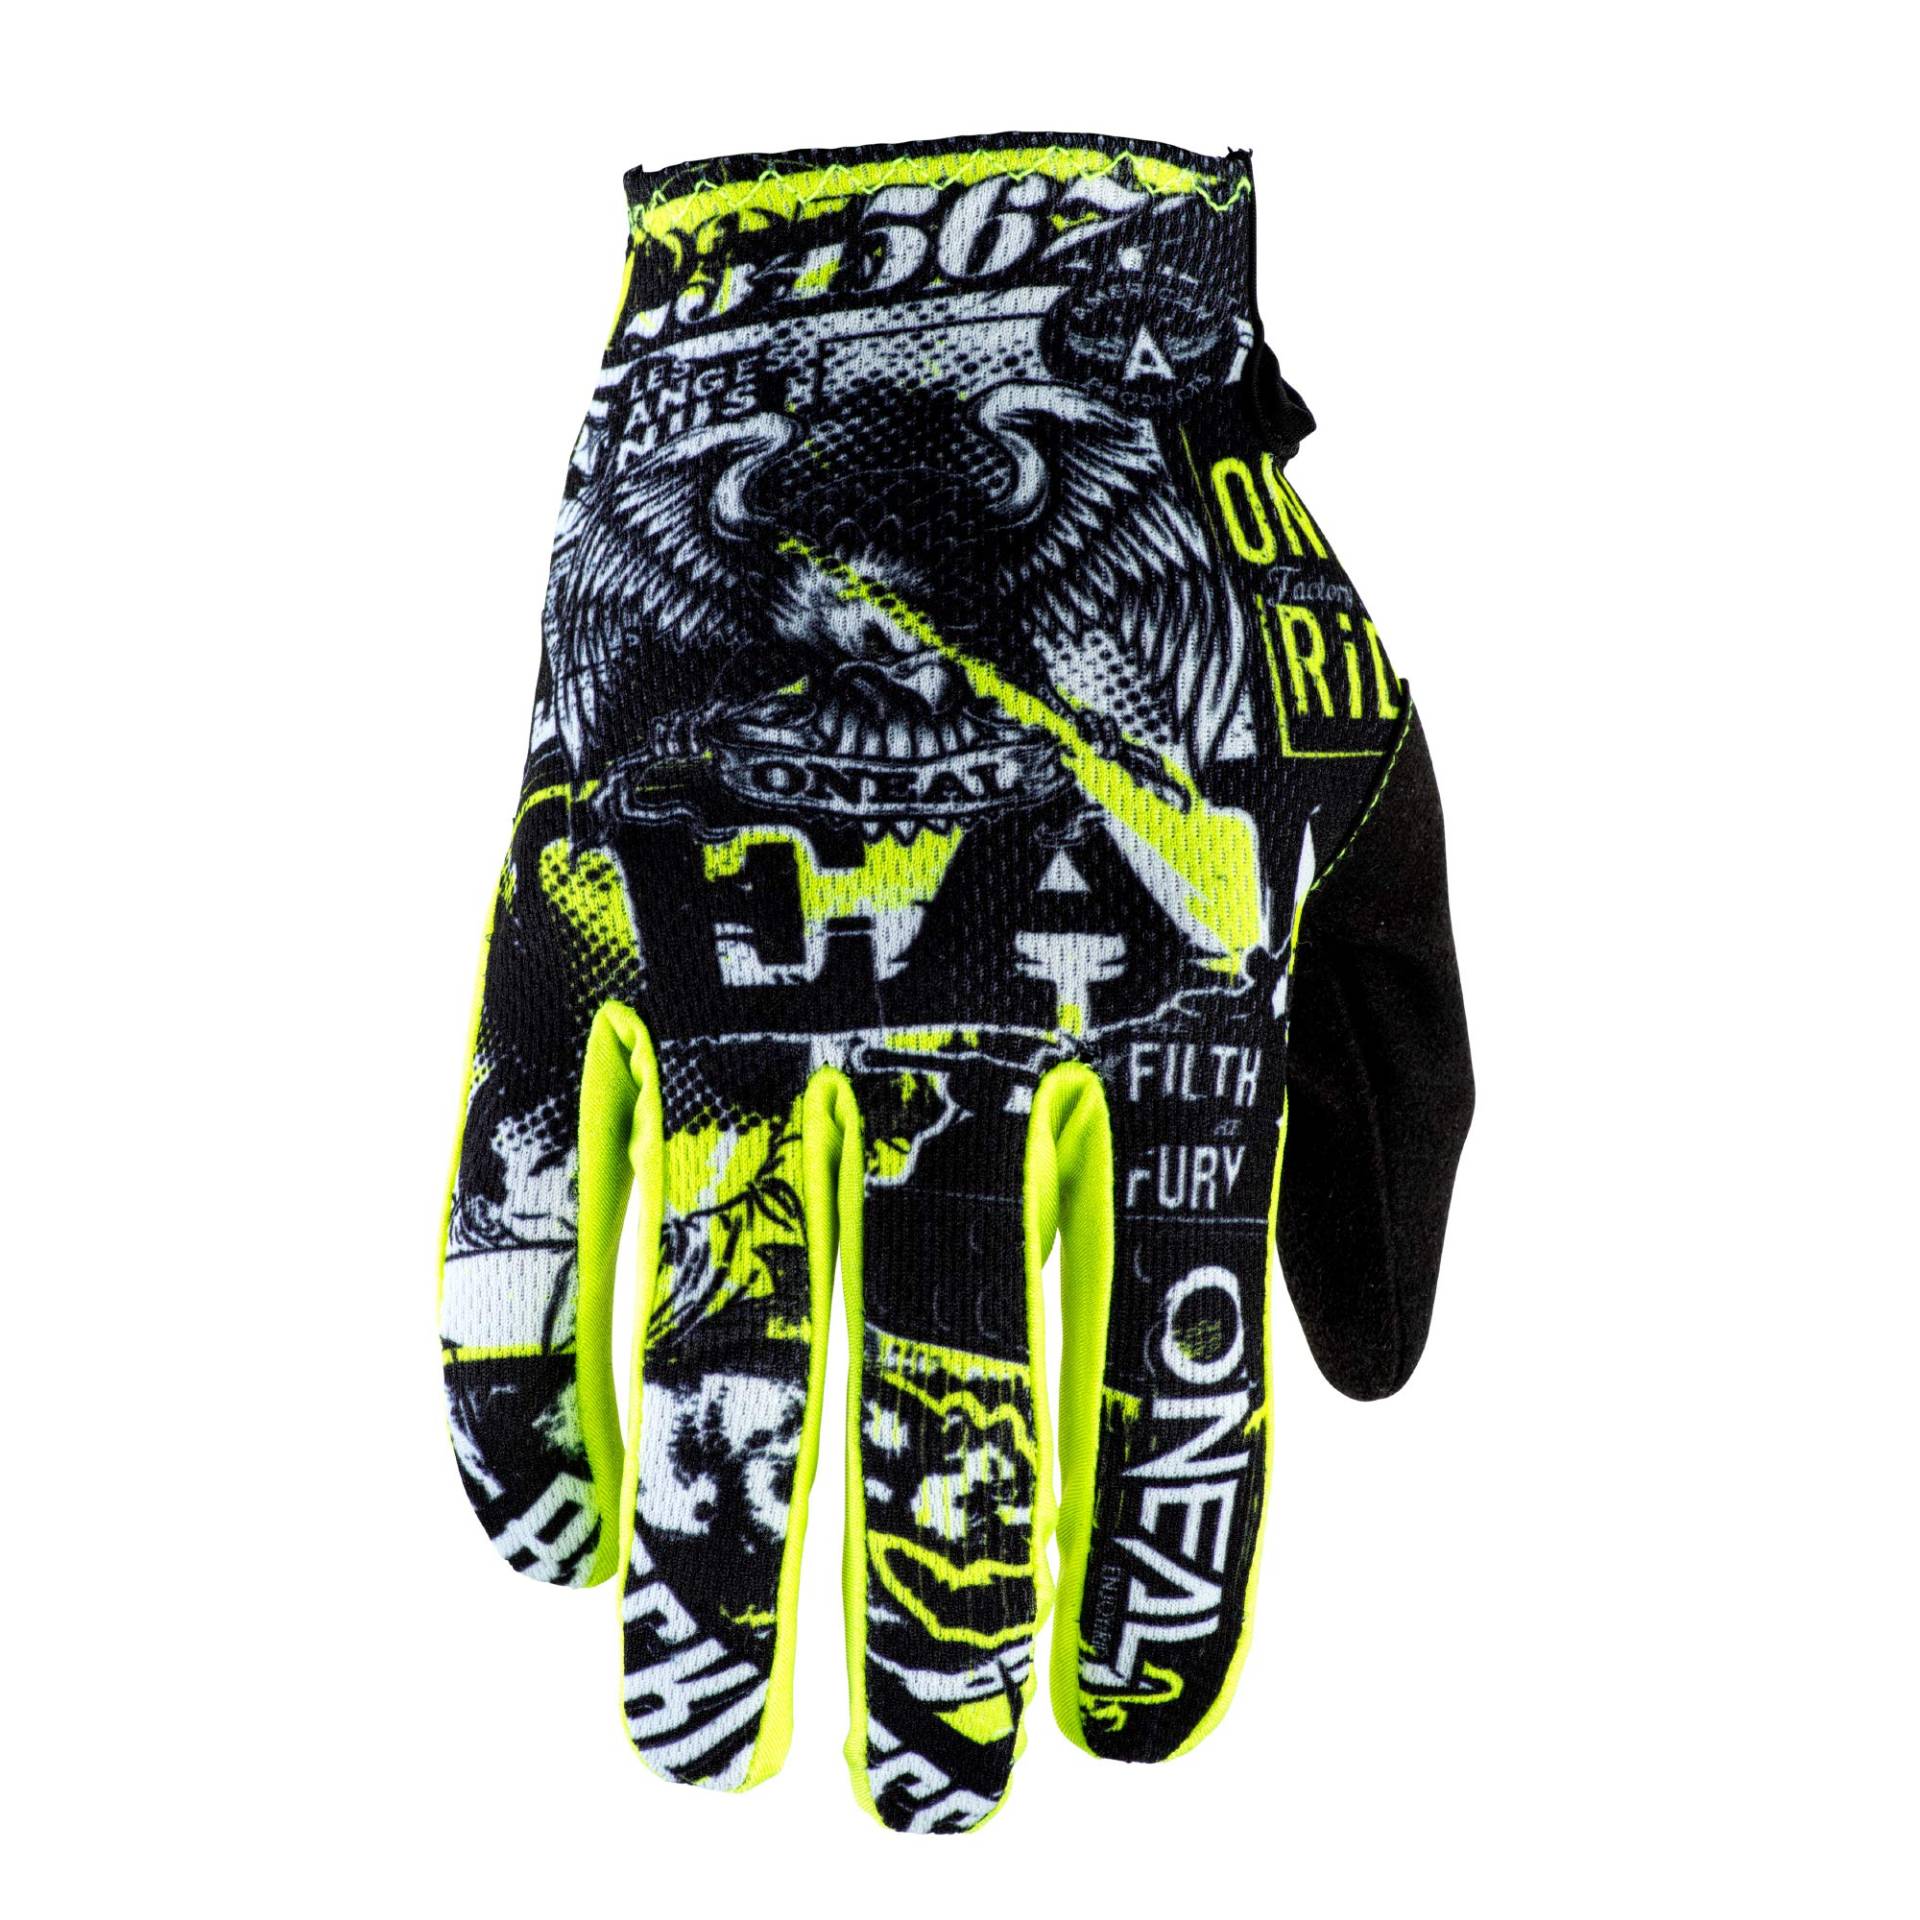 O'NEAL | Fahrrad- & Motocross-Handschuhe | MX MTB DH FR Downhill Freeride | Langlebige, Flexible Materialien, belüftete Handoberseite | Matrix Glove Attack | Unisex | Schwarz Neon Gelb | Größe L von O'NEAL